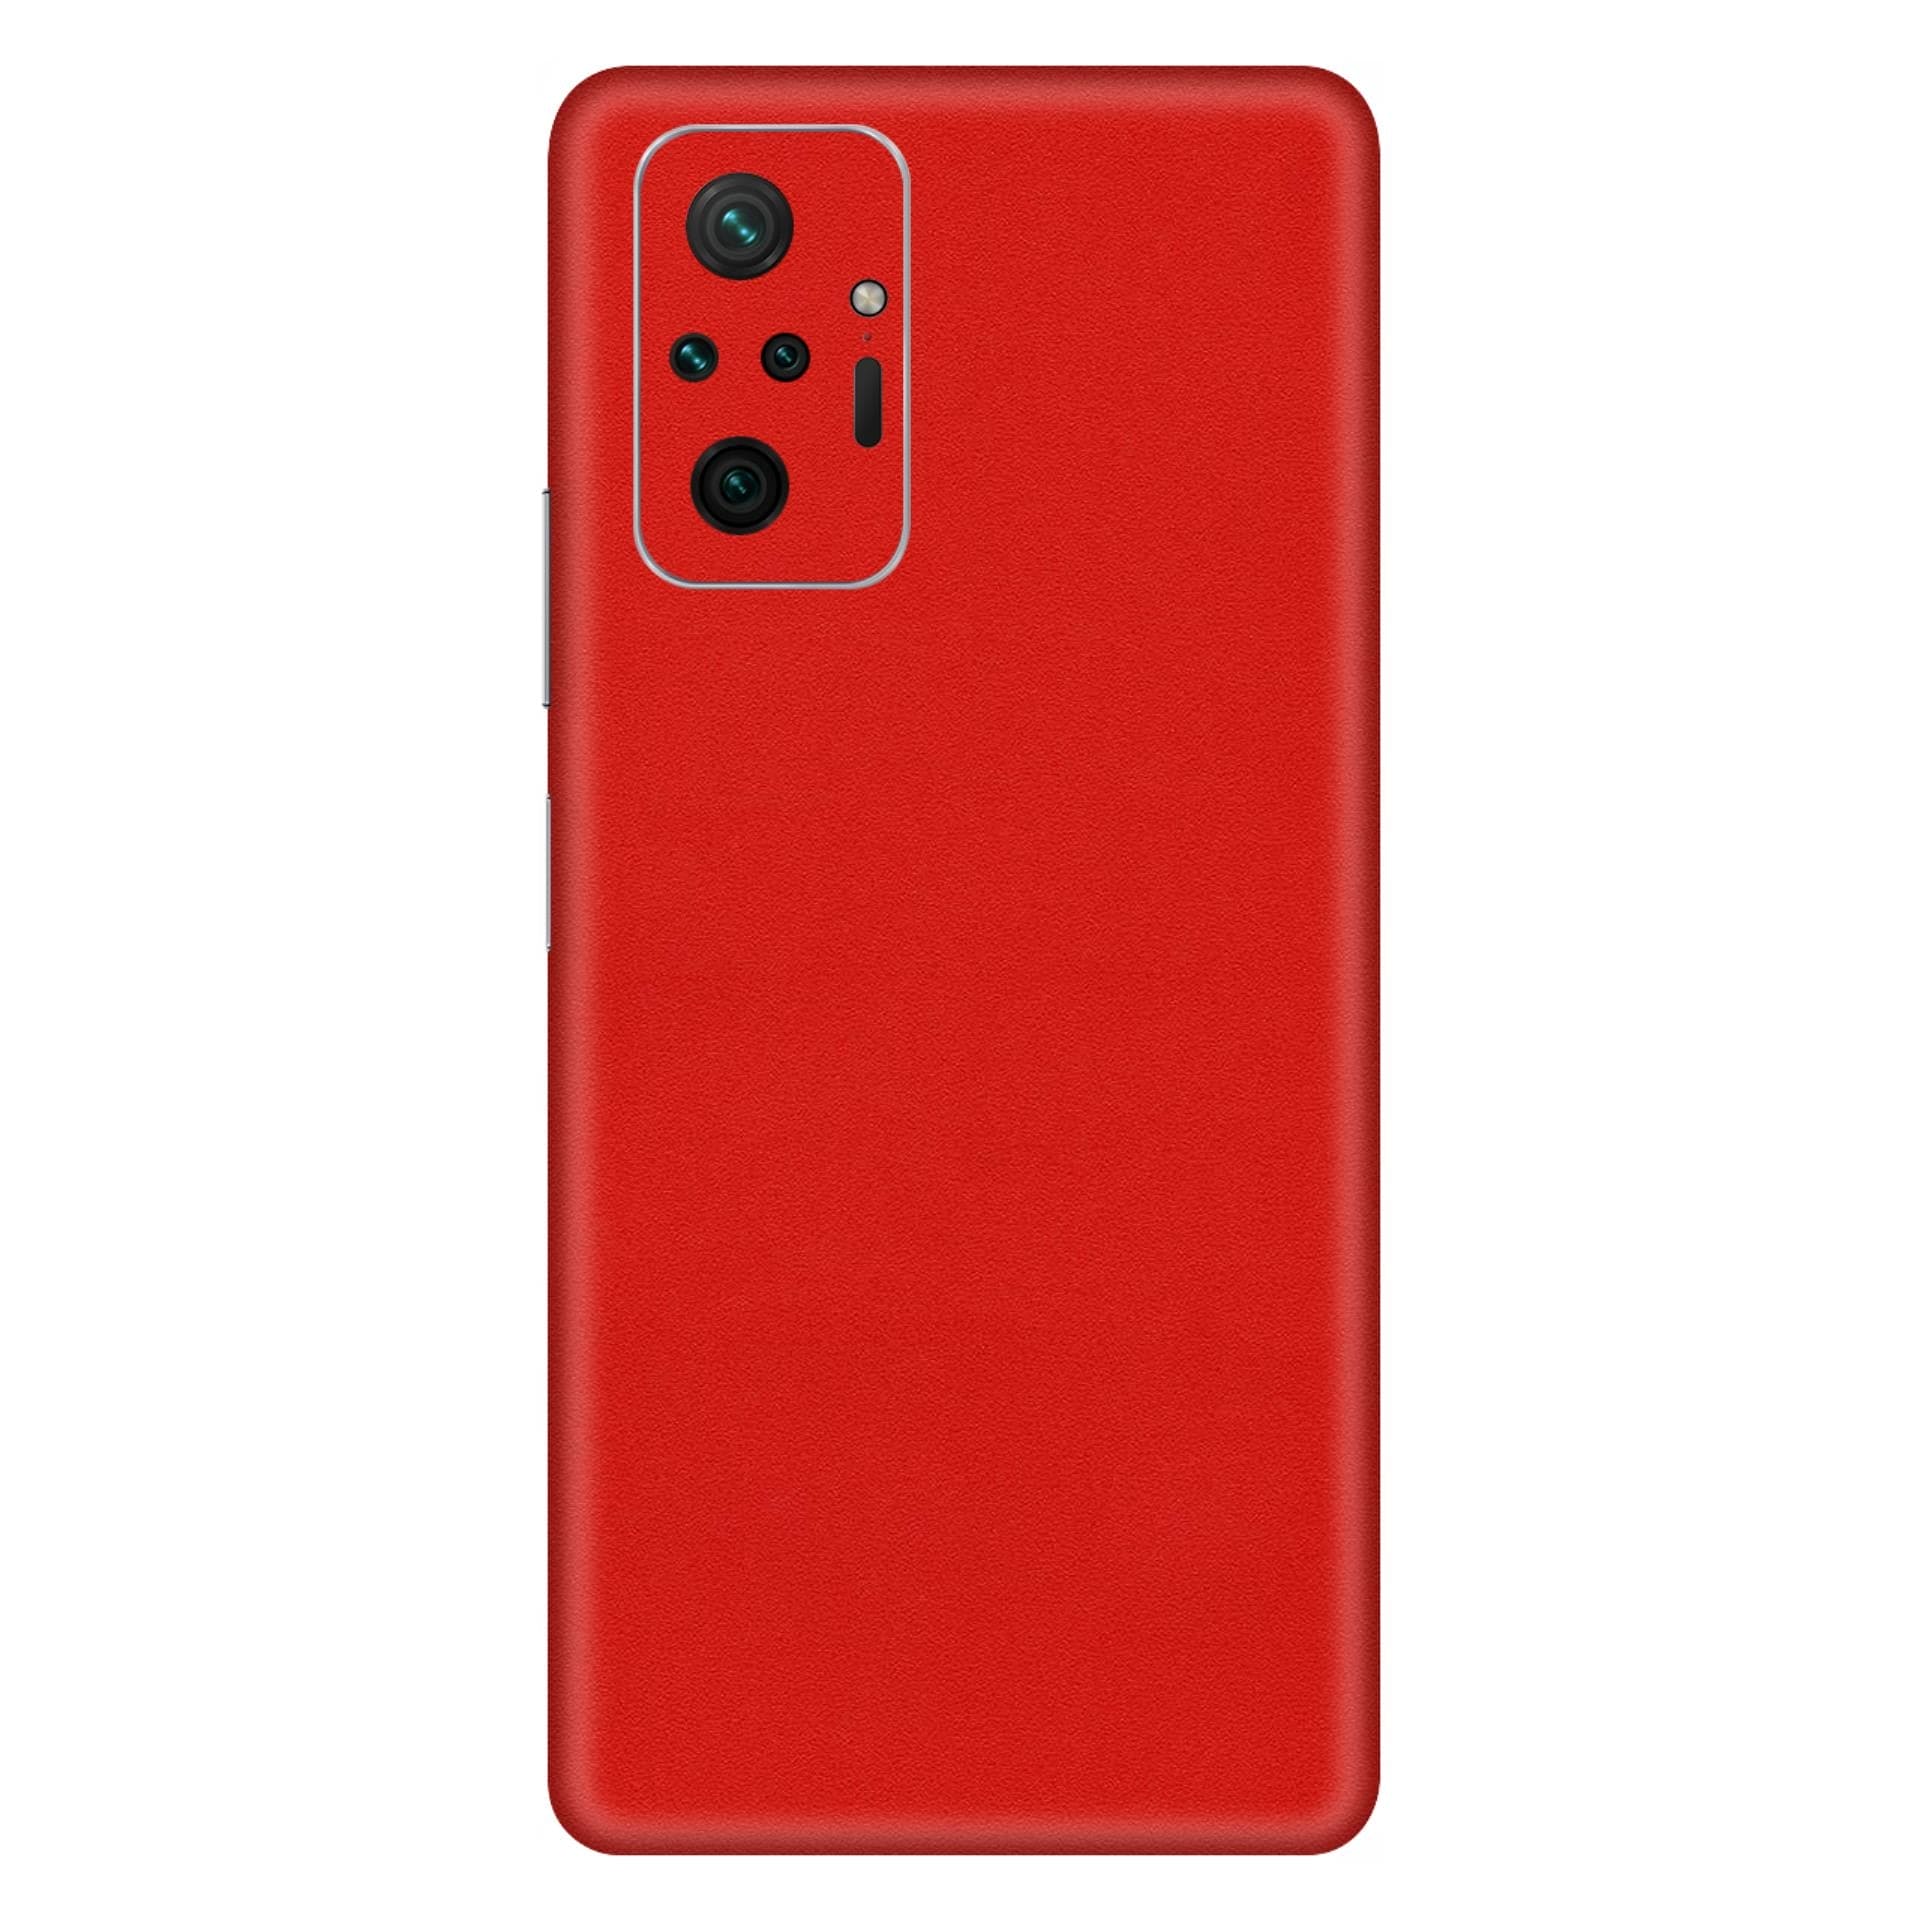 Redmi Note 10 Pro Max Matte Red skins